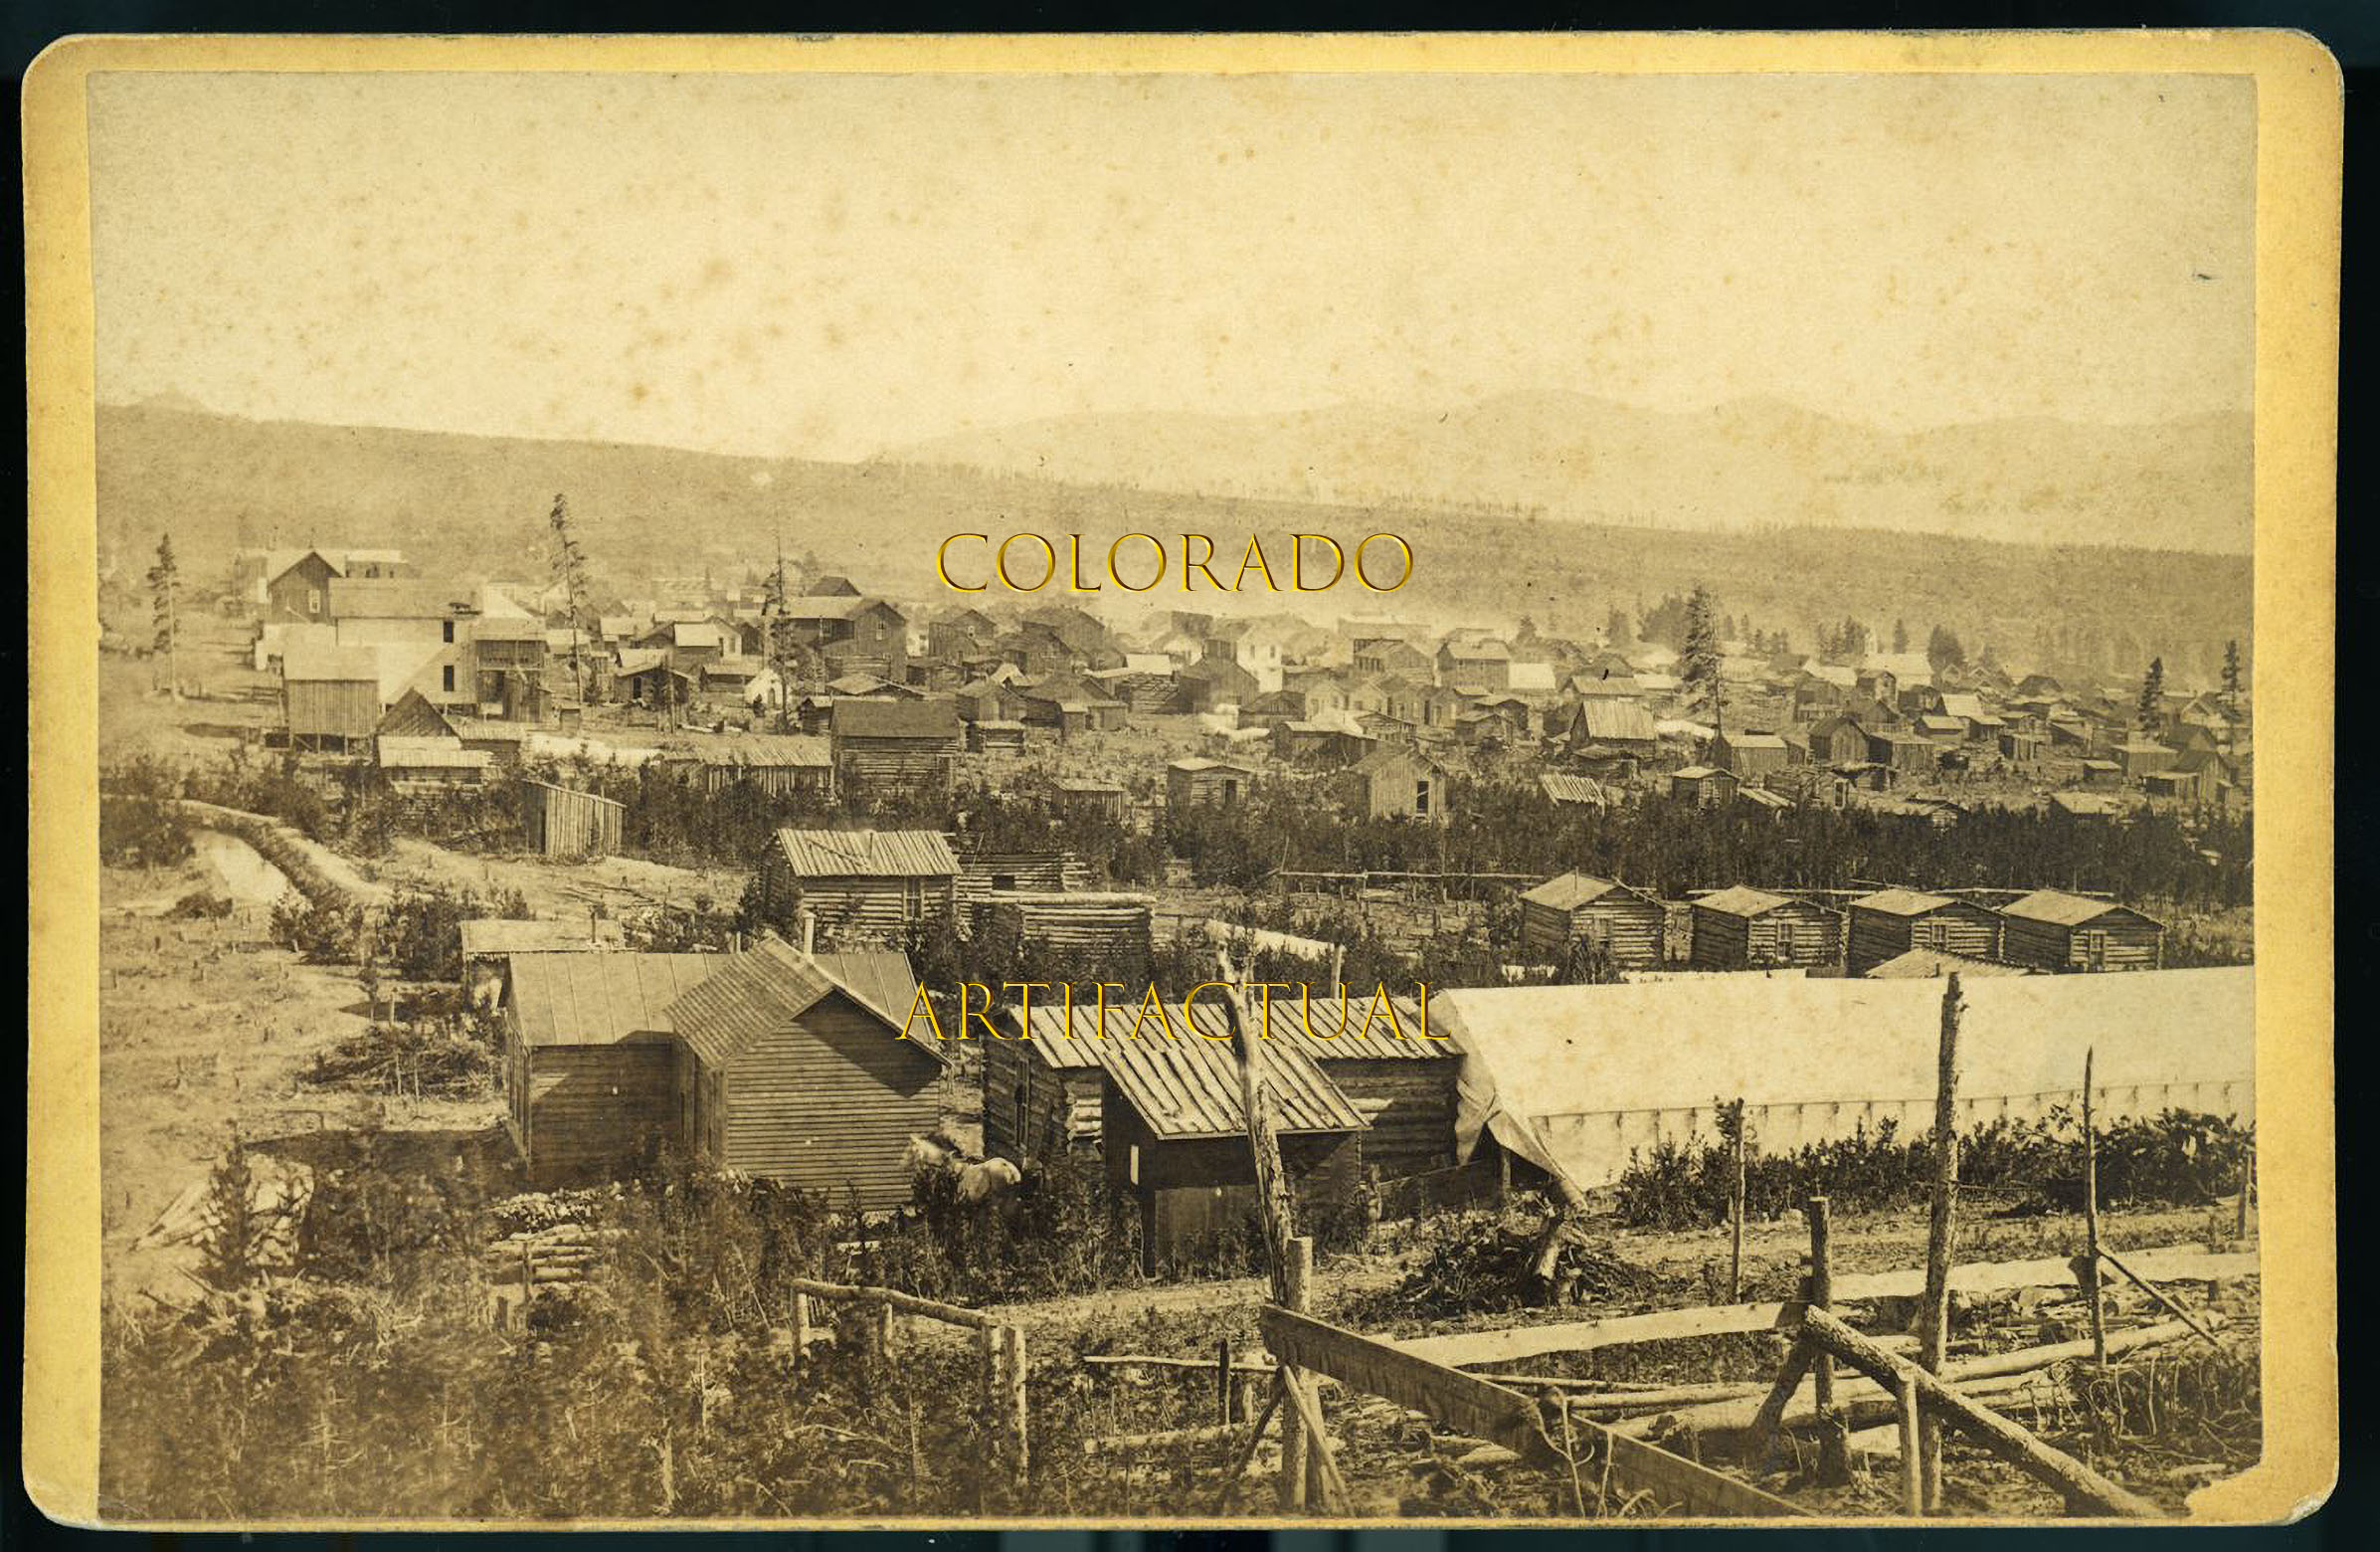 LEADVILLE COLORADO original 1879 photograph G. D. Wakely photographer 1879